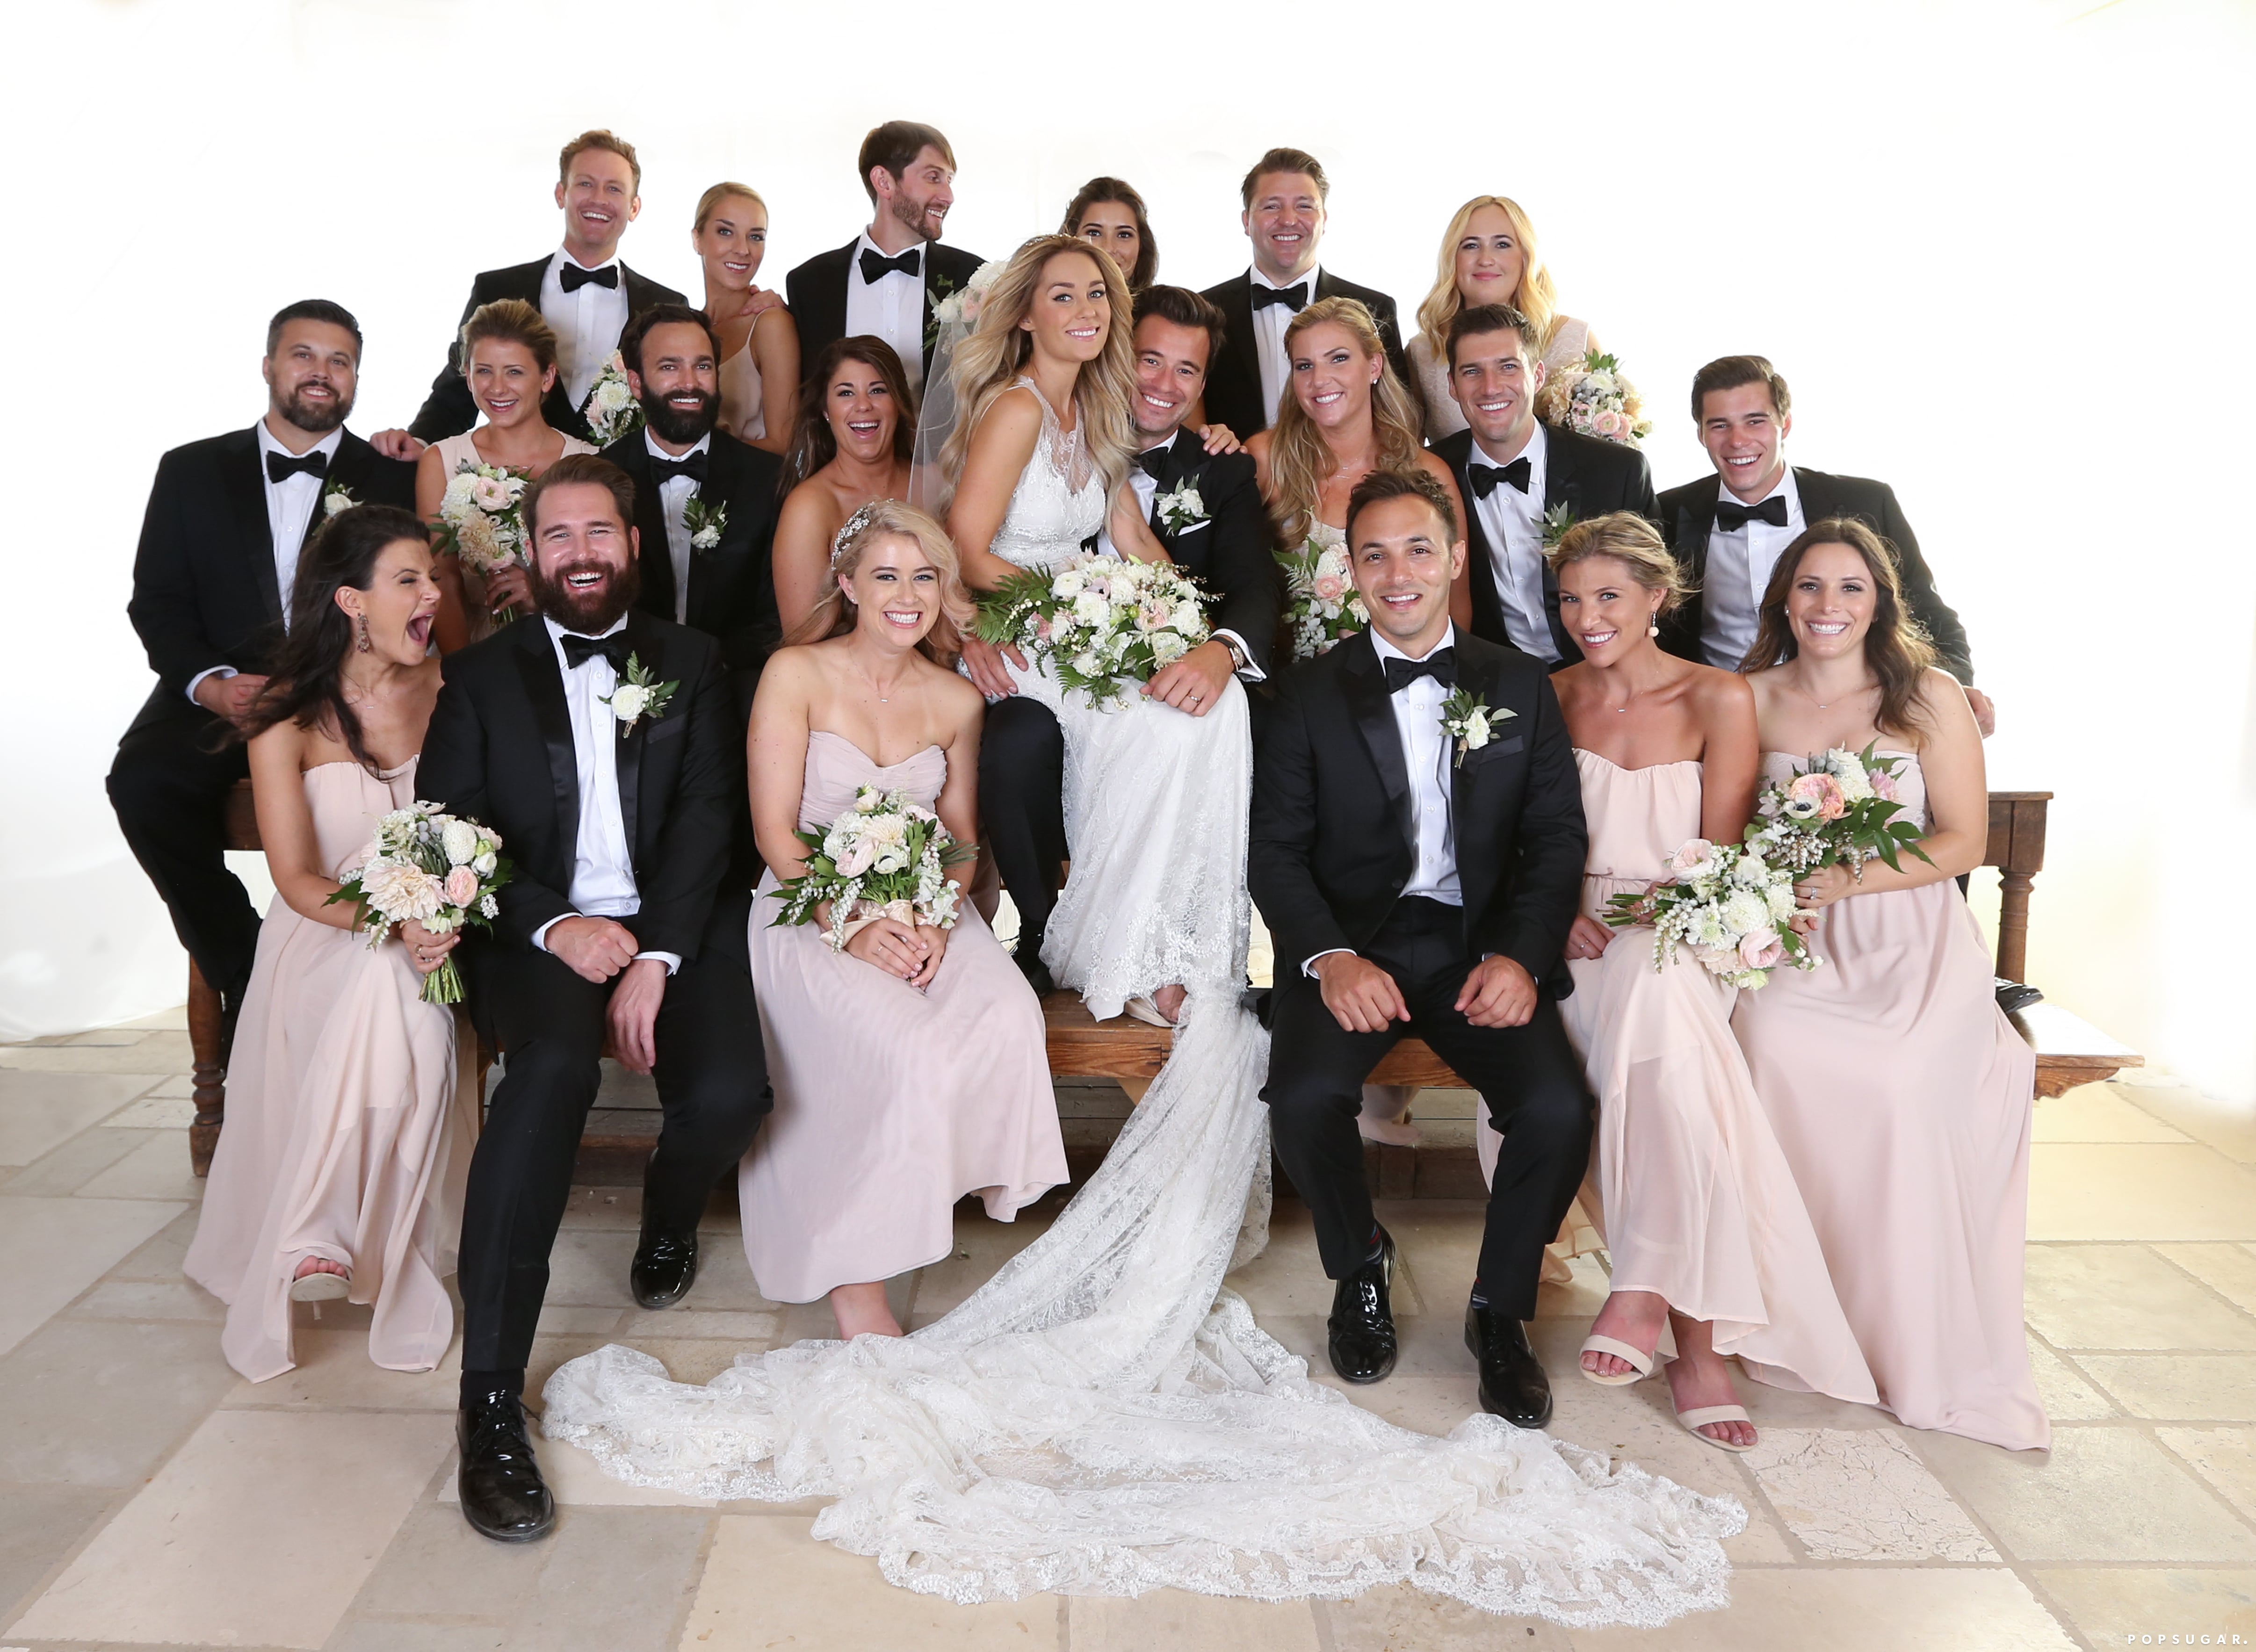 Lauren Conrad's Wedding Photos Are Here! – StyleCaster